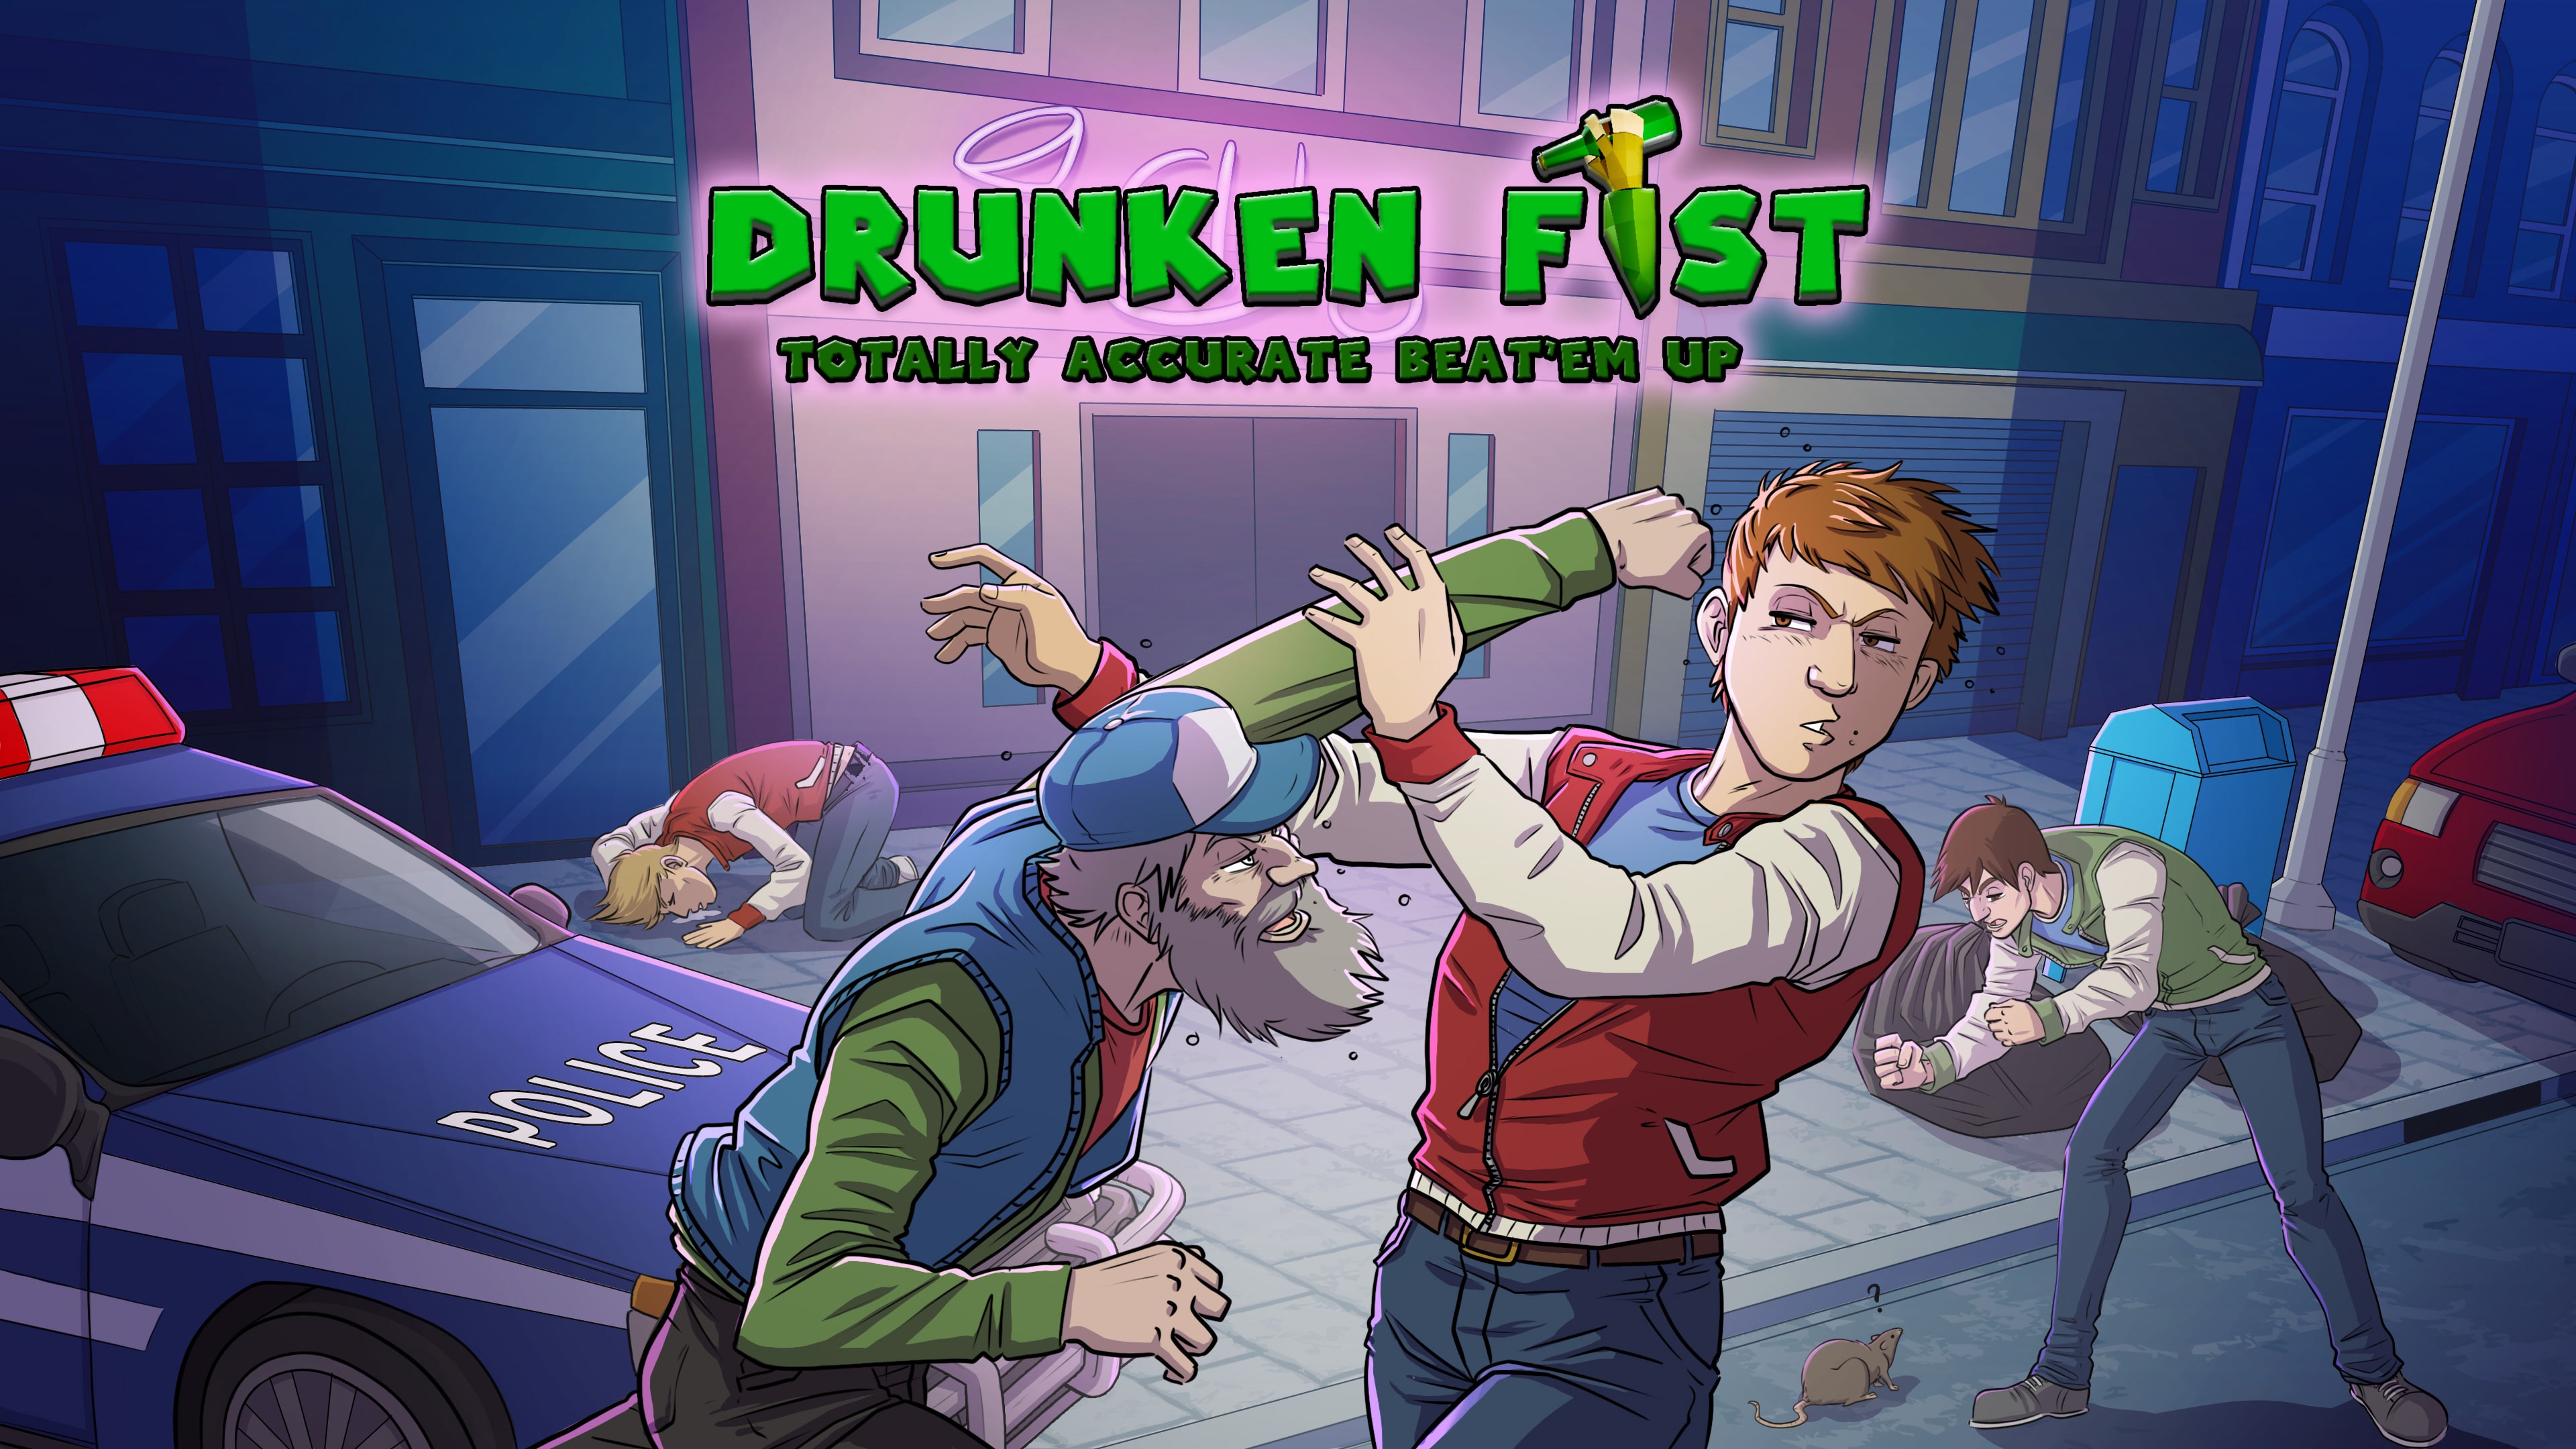 Drunken Fist (English, Korean, Japanese, Traditional Chinese)